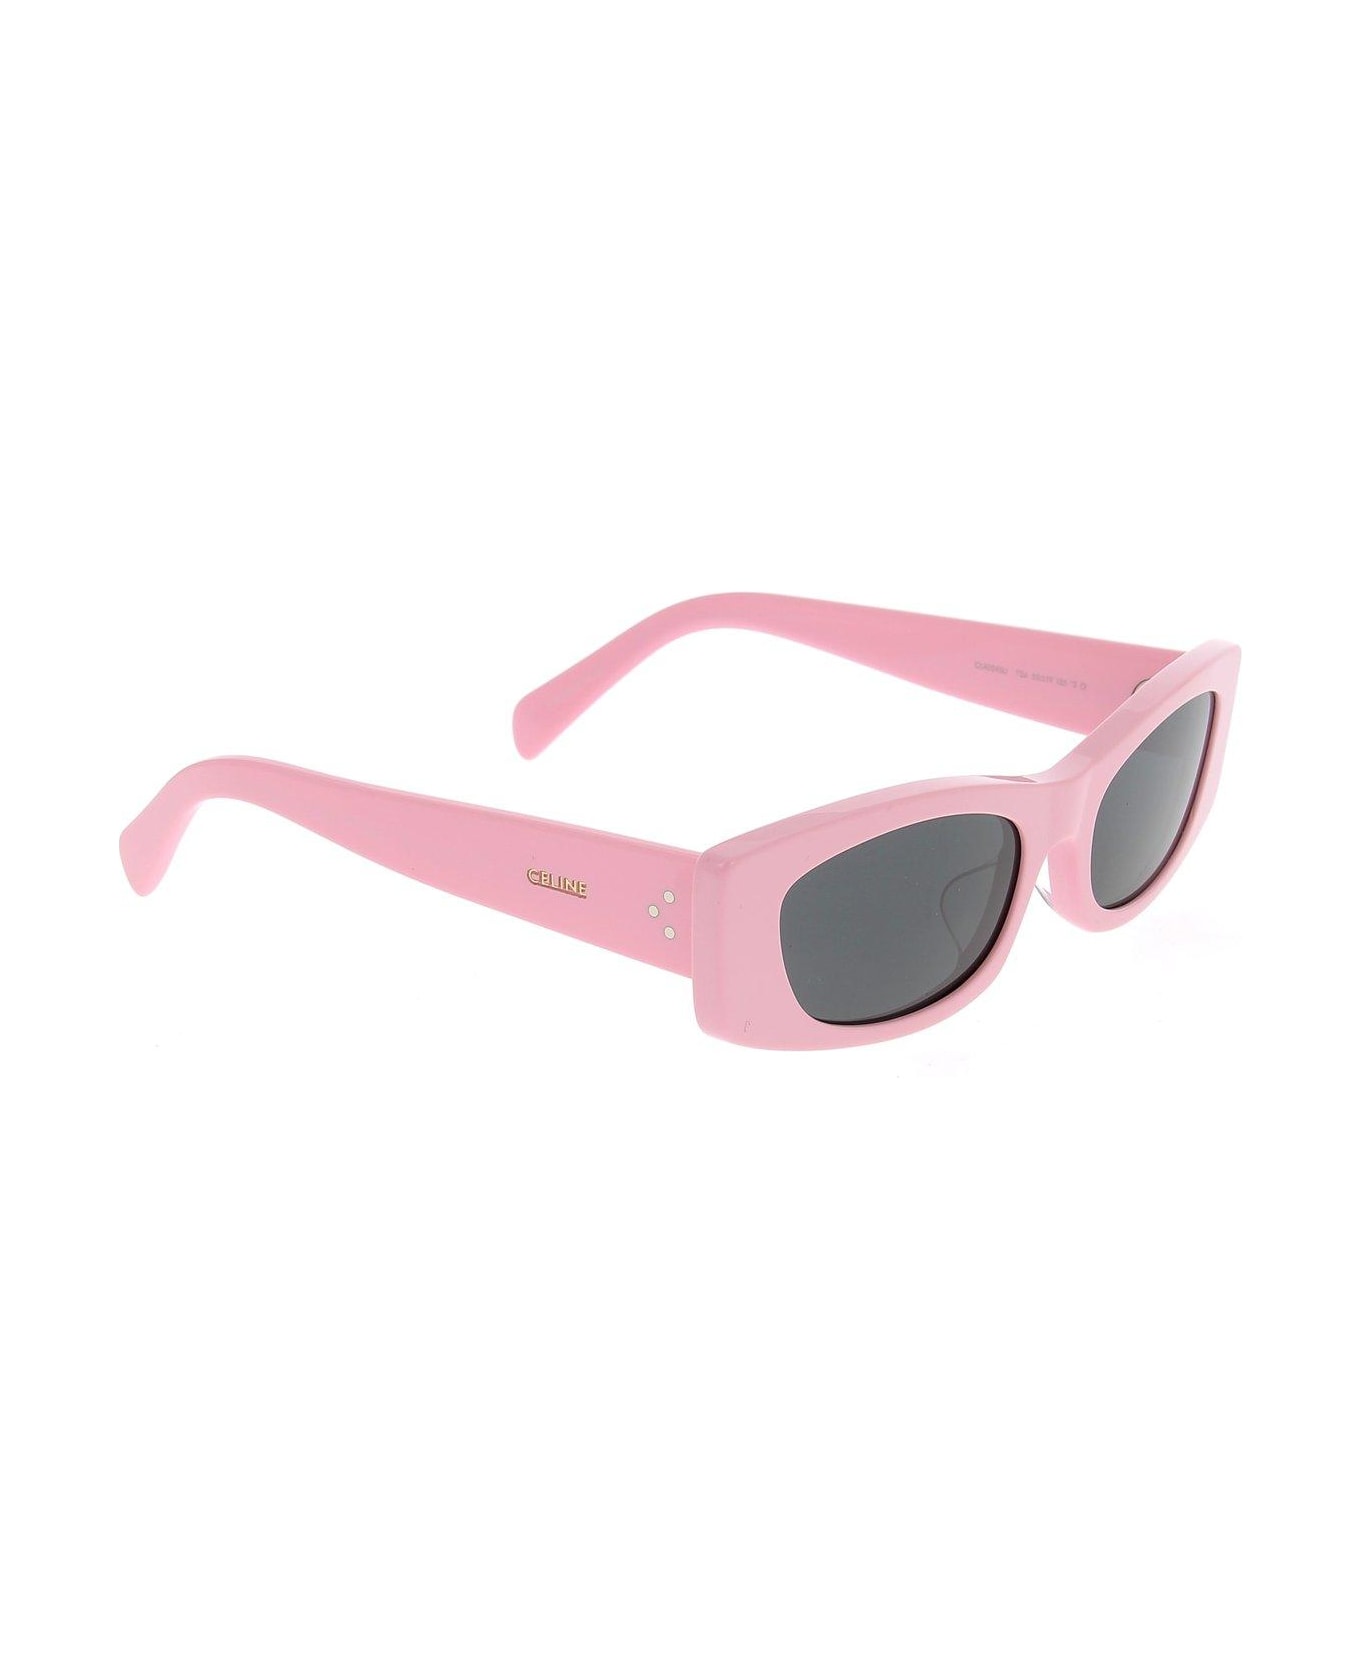 Celine rectangular Frame Sunglasses - 72a サングラス